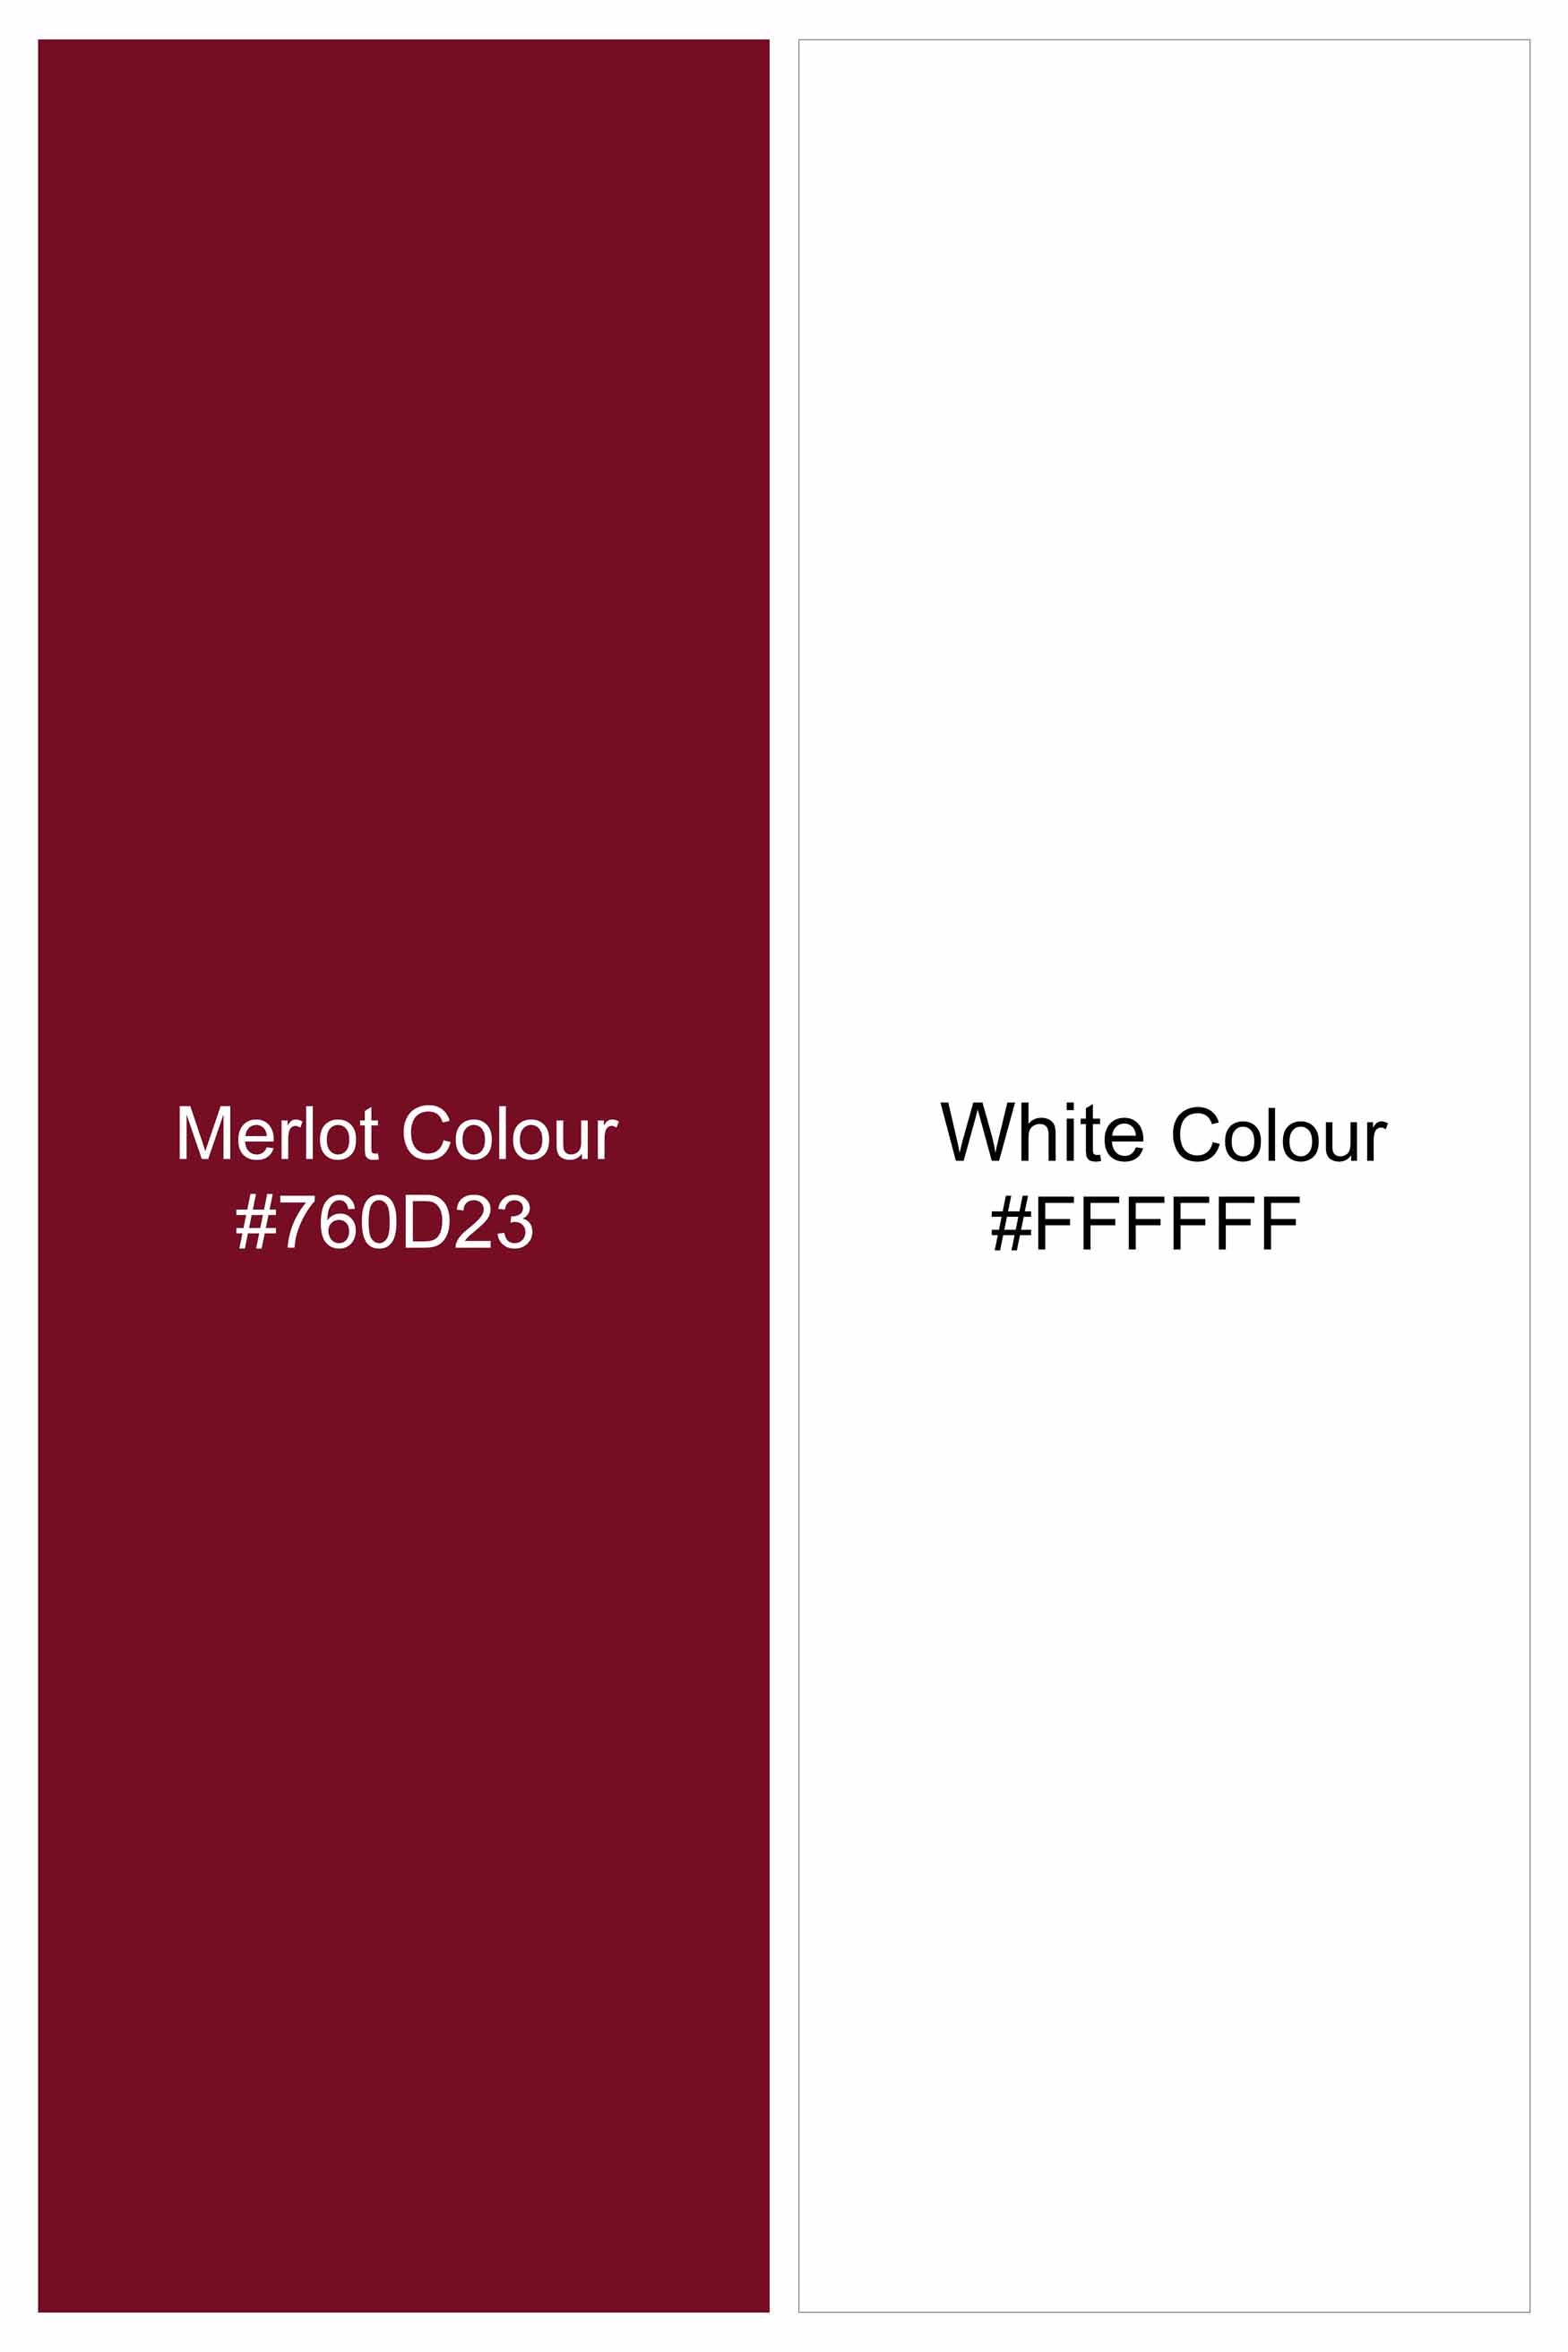 Melrot Red and White Plaid Premium Cotton Shirt